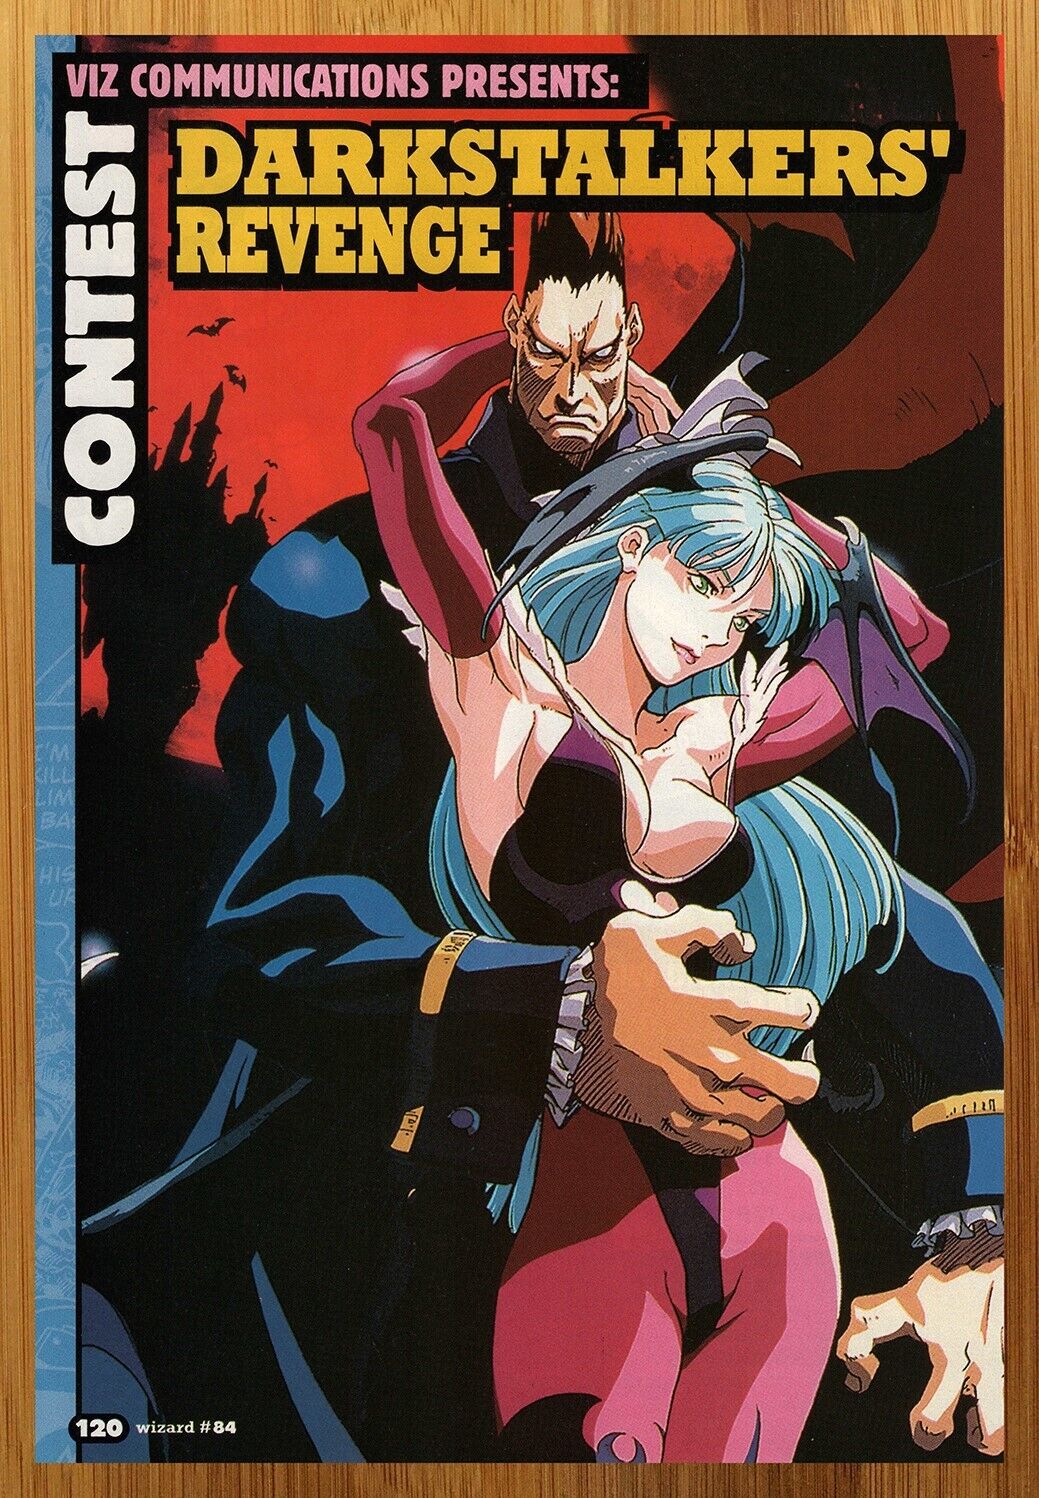 1998 Darkstalkers Revenge Vintage Print Ad/Poster Anime Manga Video Game Art 90s